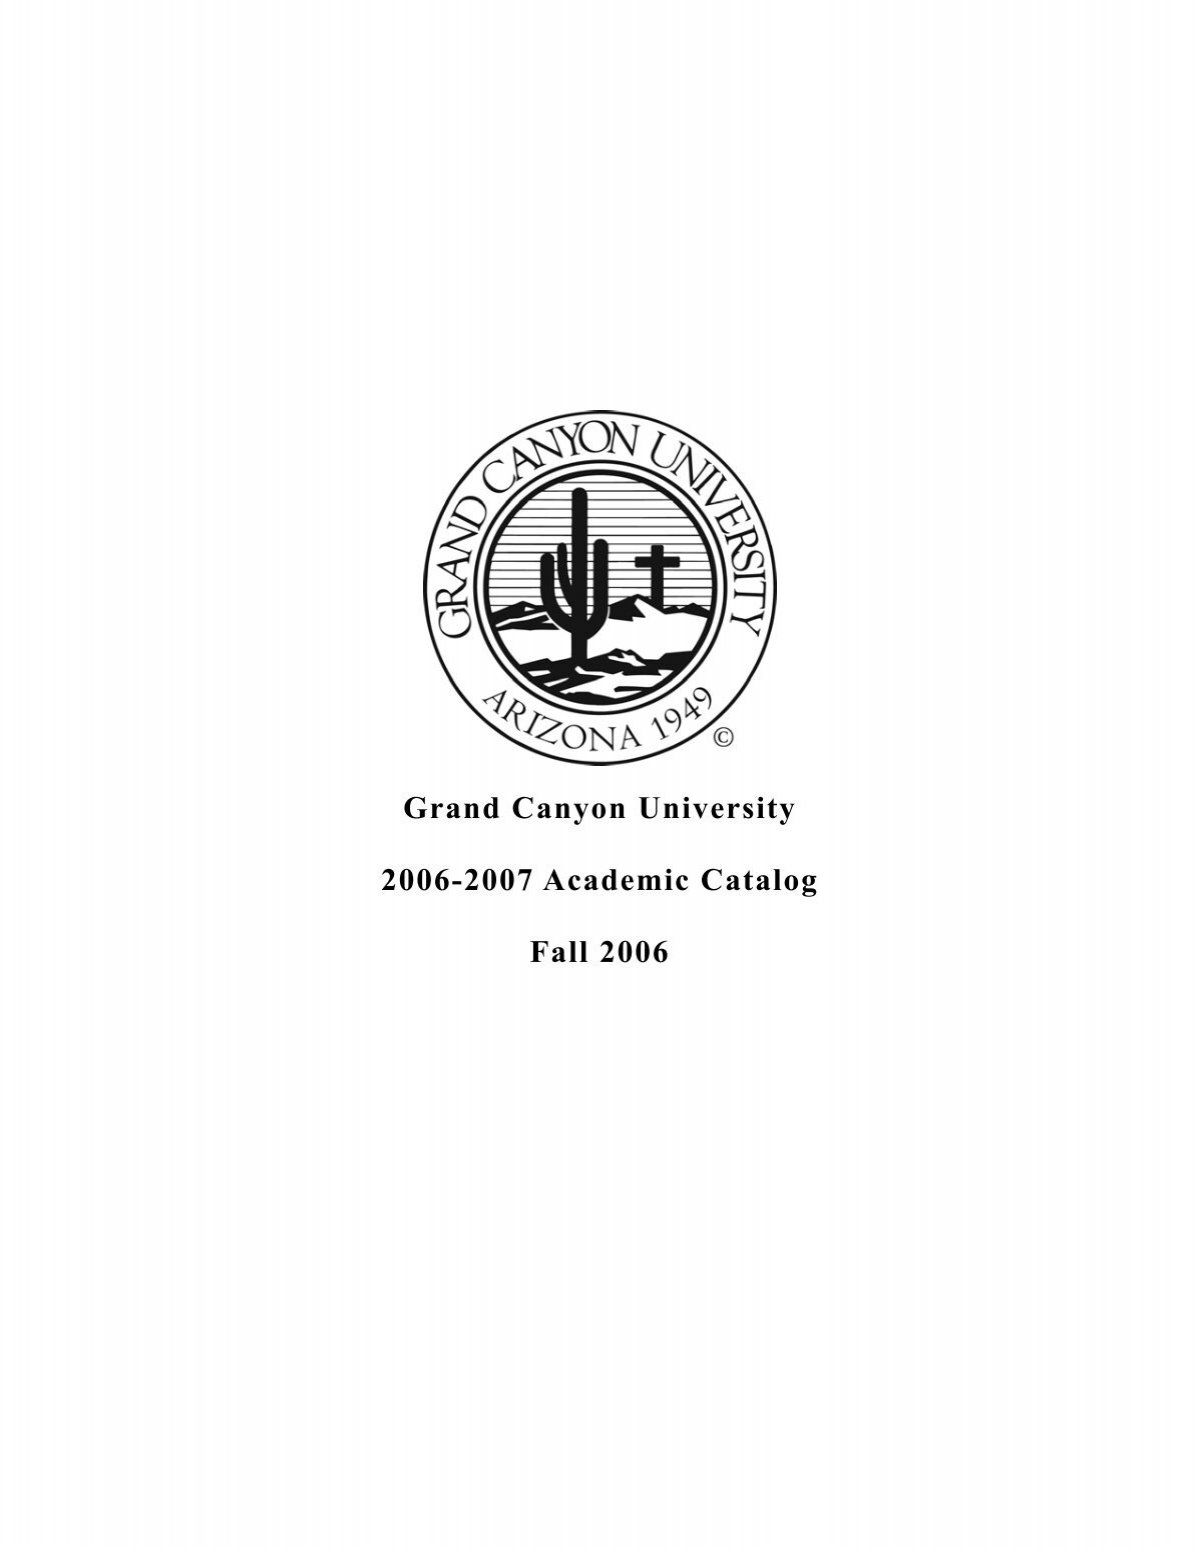 Grand Canyon University 2006-2007 Academic Catalog Fall 2006